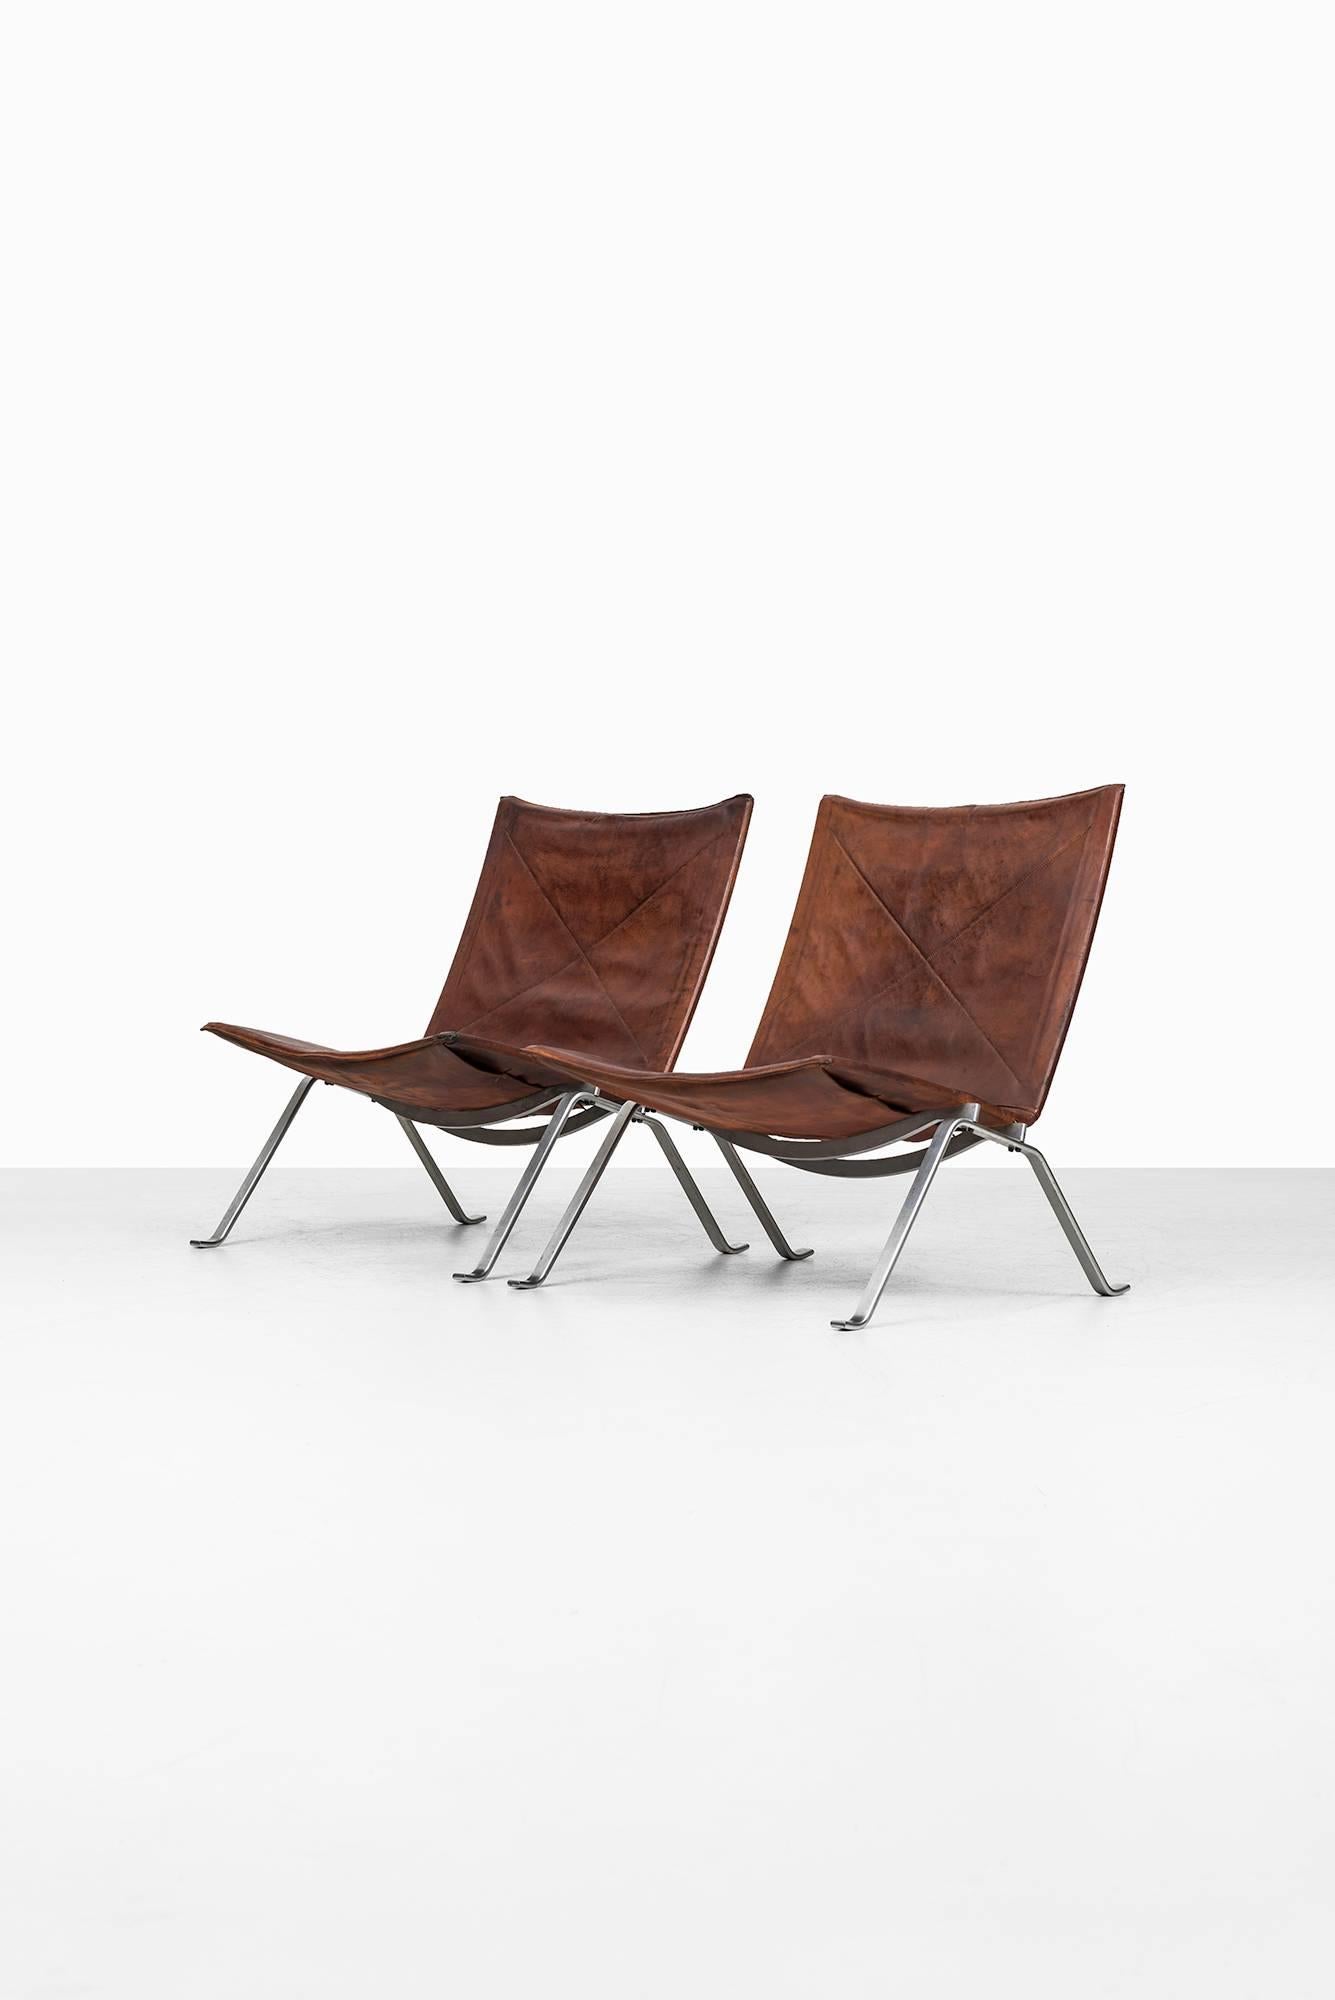 Scandinavian Modern Poul Kjærholm, a Set of Four PK-22 Easy Chairs by E. Kold Christensen in Denmark